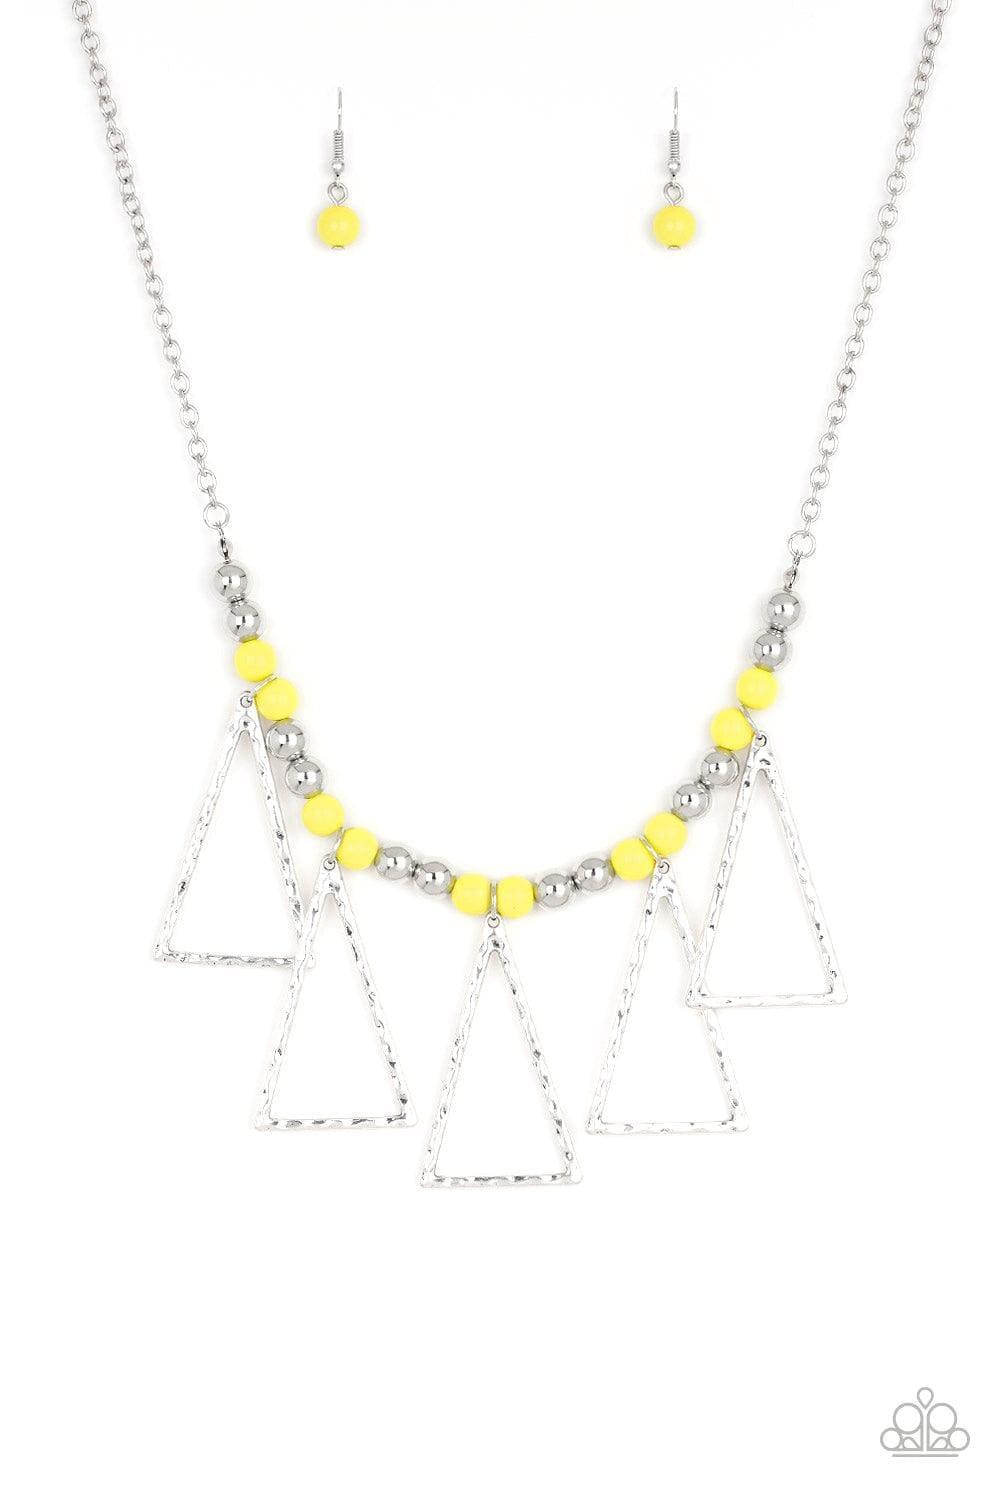 Paparazzi Accessories - Terra Nouveau - Yellow Necklace - Bling by JessieK